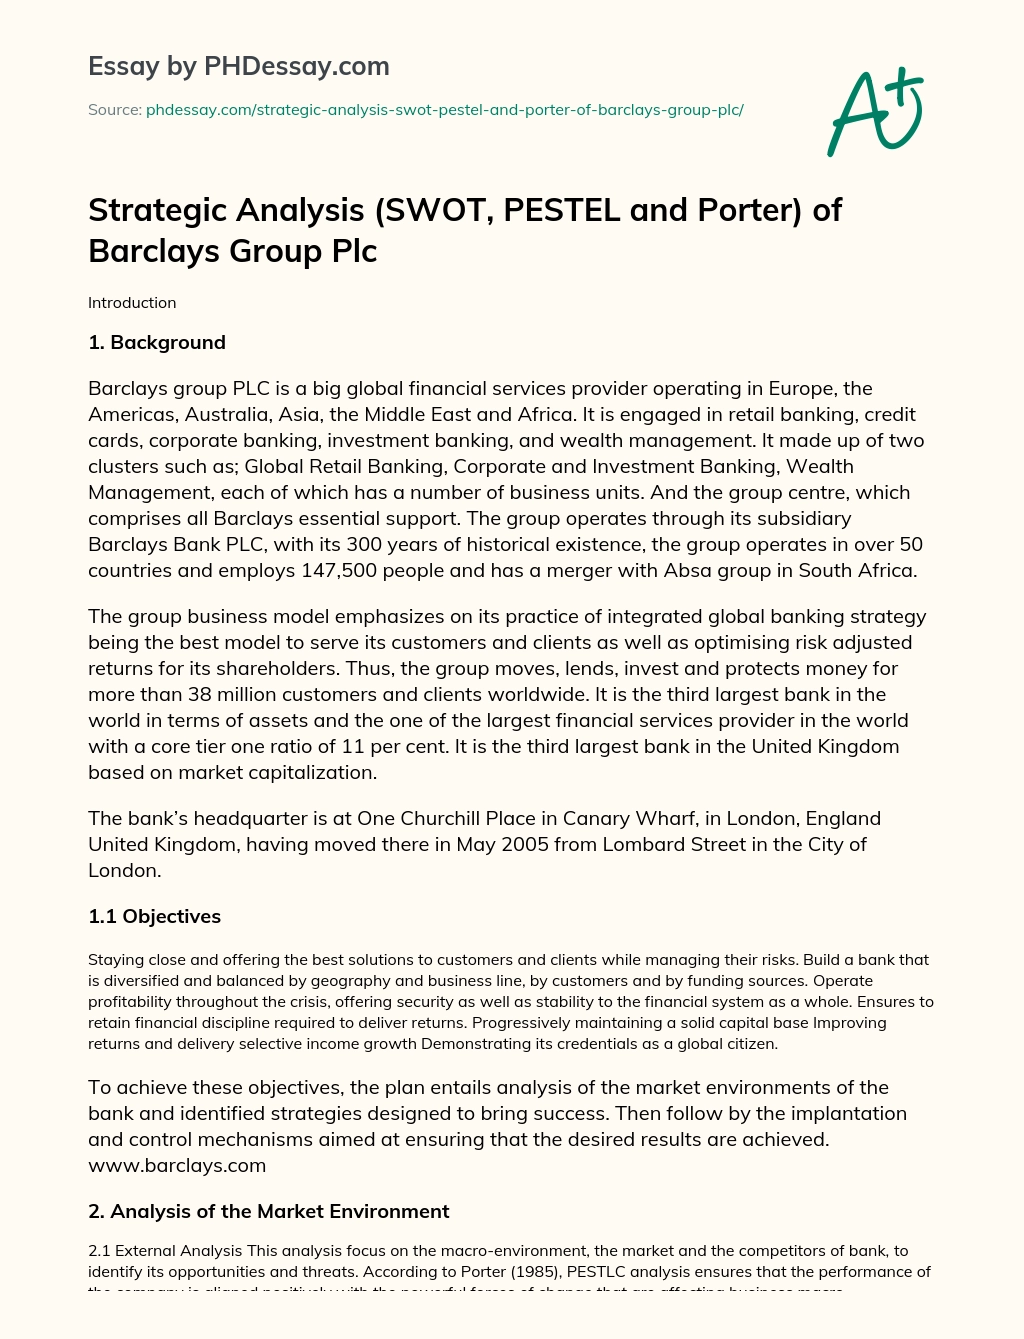 Strategic Analysis (SWOT, PESTEL and Porter) of Barclays Group Plc essay